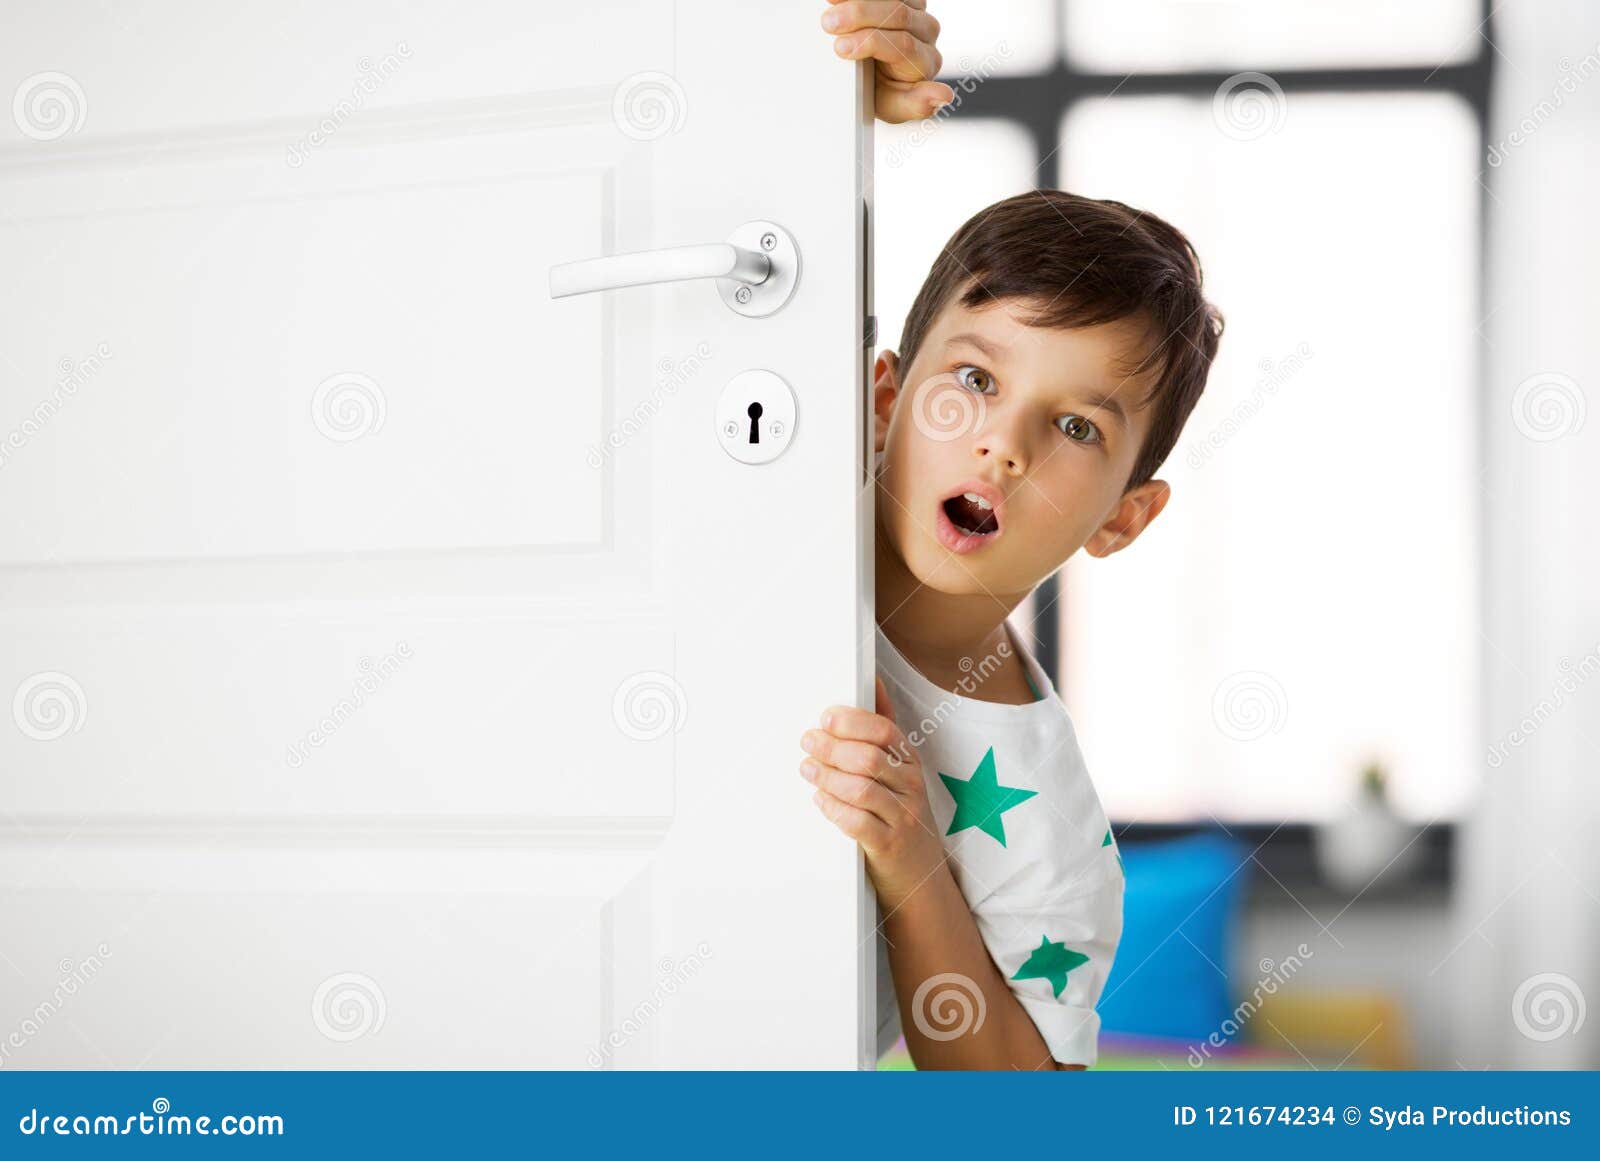 2 boys 1 door. Мальчик выглядывает. Мальчик выглядывает из двери. Ребенок выглядывает из за двери. Человек выглядывает из двери.